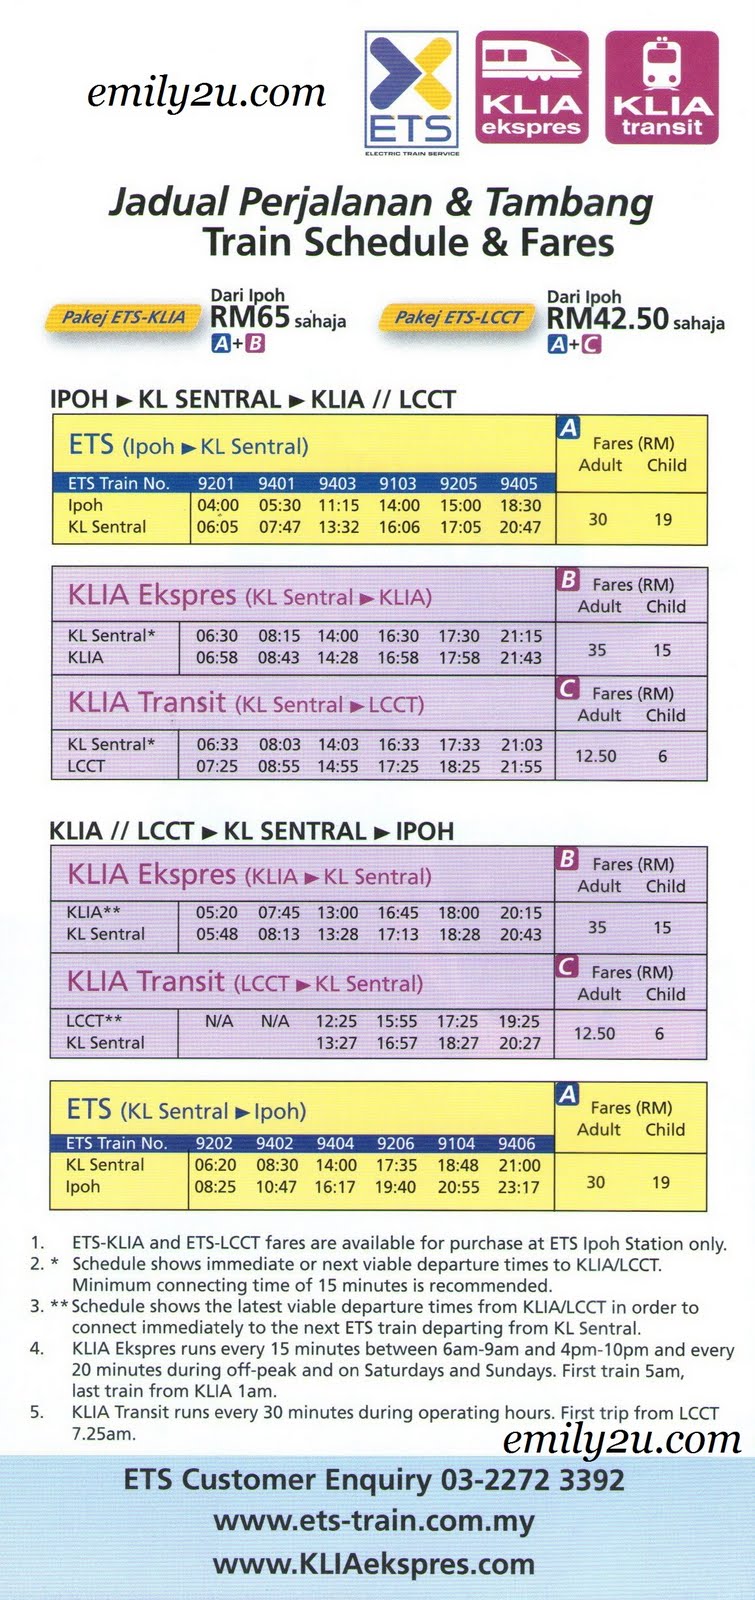 Ets Ipoh Kl Sentral Klia2 Klia Train Schedule Fares From Emily To You